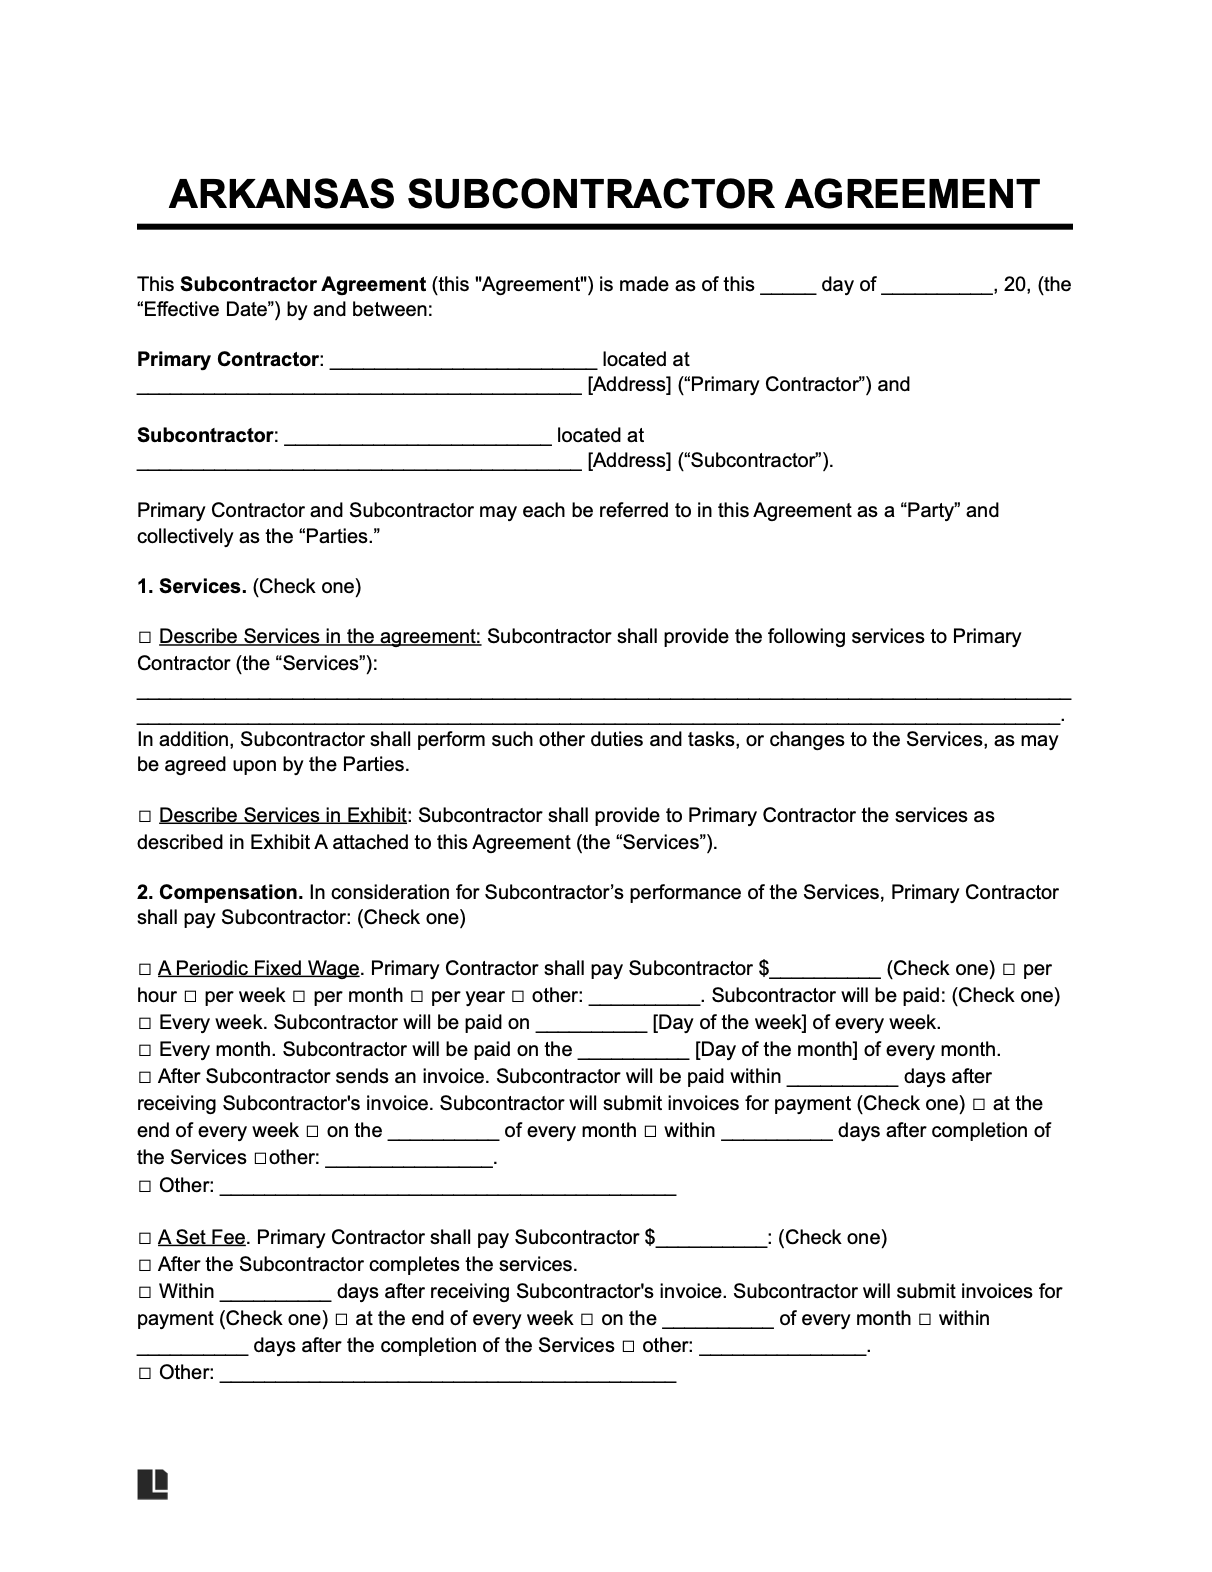 arkansas subcontractor agreement template